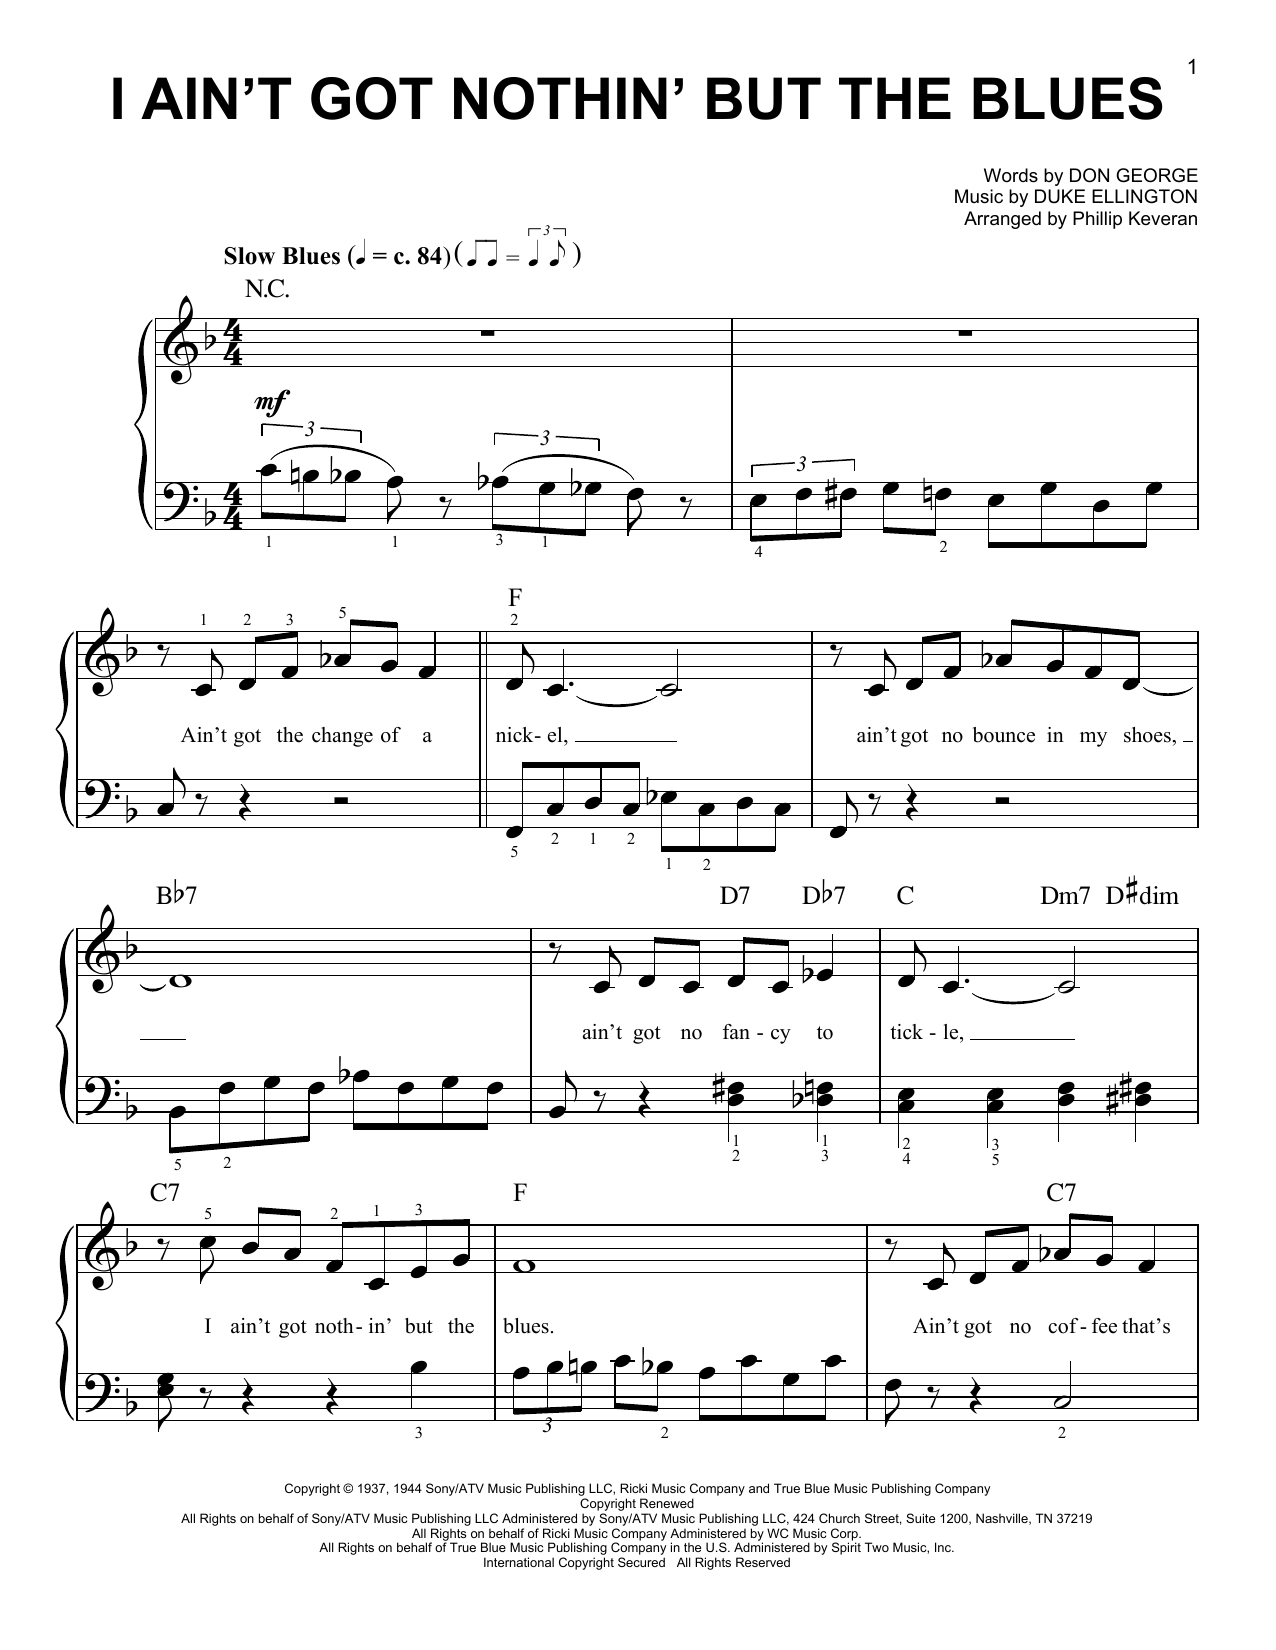 Duke Ellington I Ain't Got Nothin' But The Blues (arr. Phillip Keveren) Sheet Music Notes & Chords for Easy Piano - Download or Print PDF